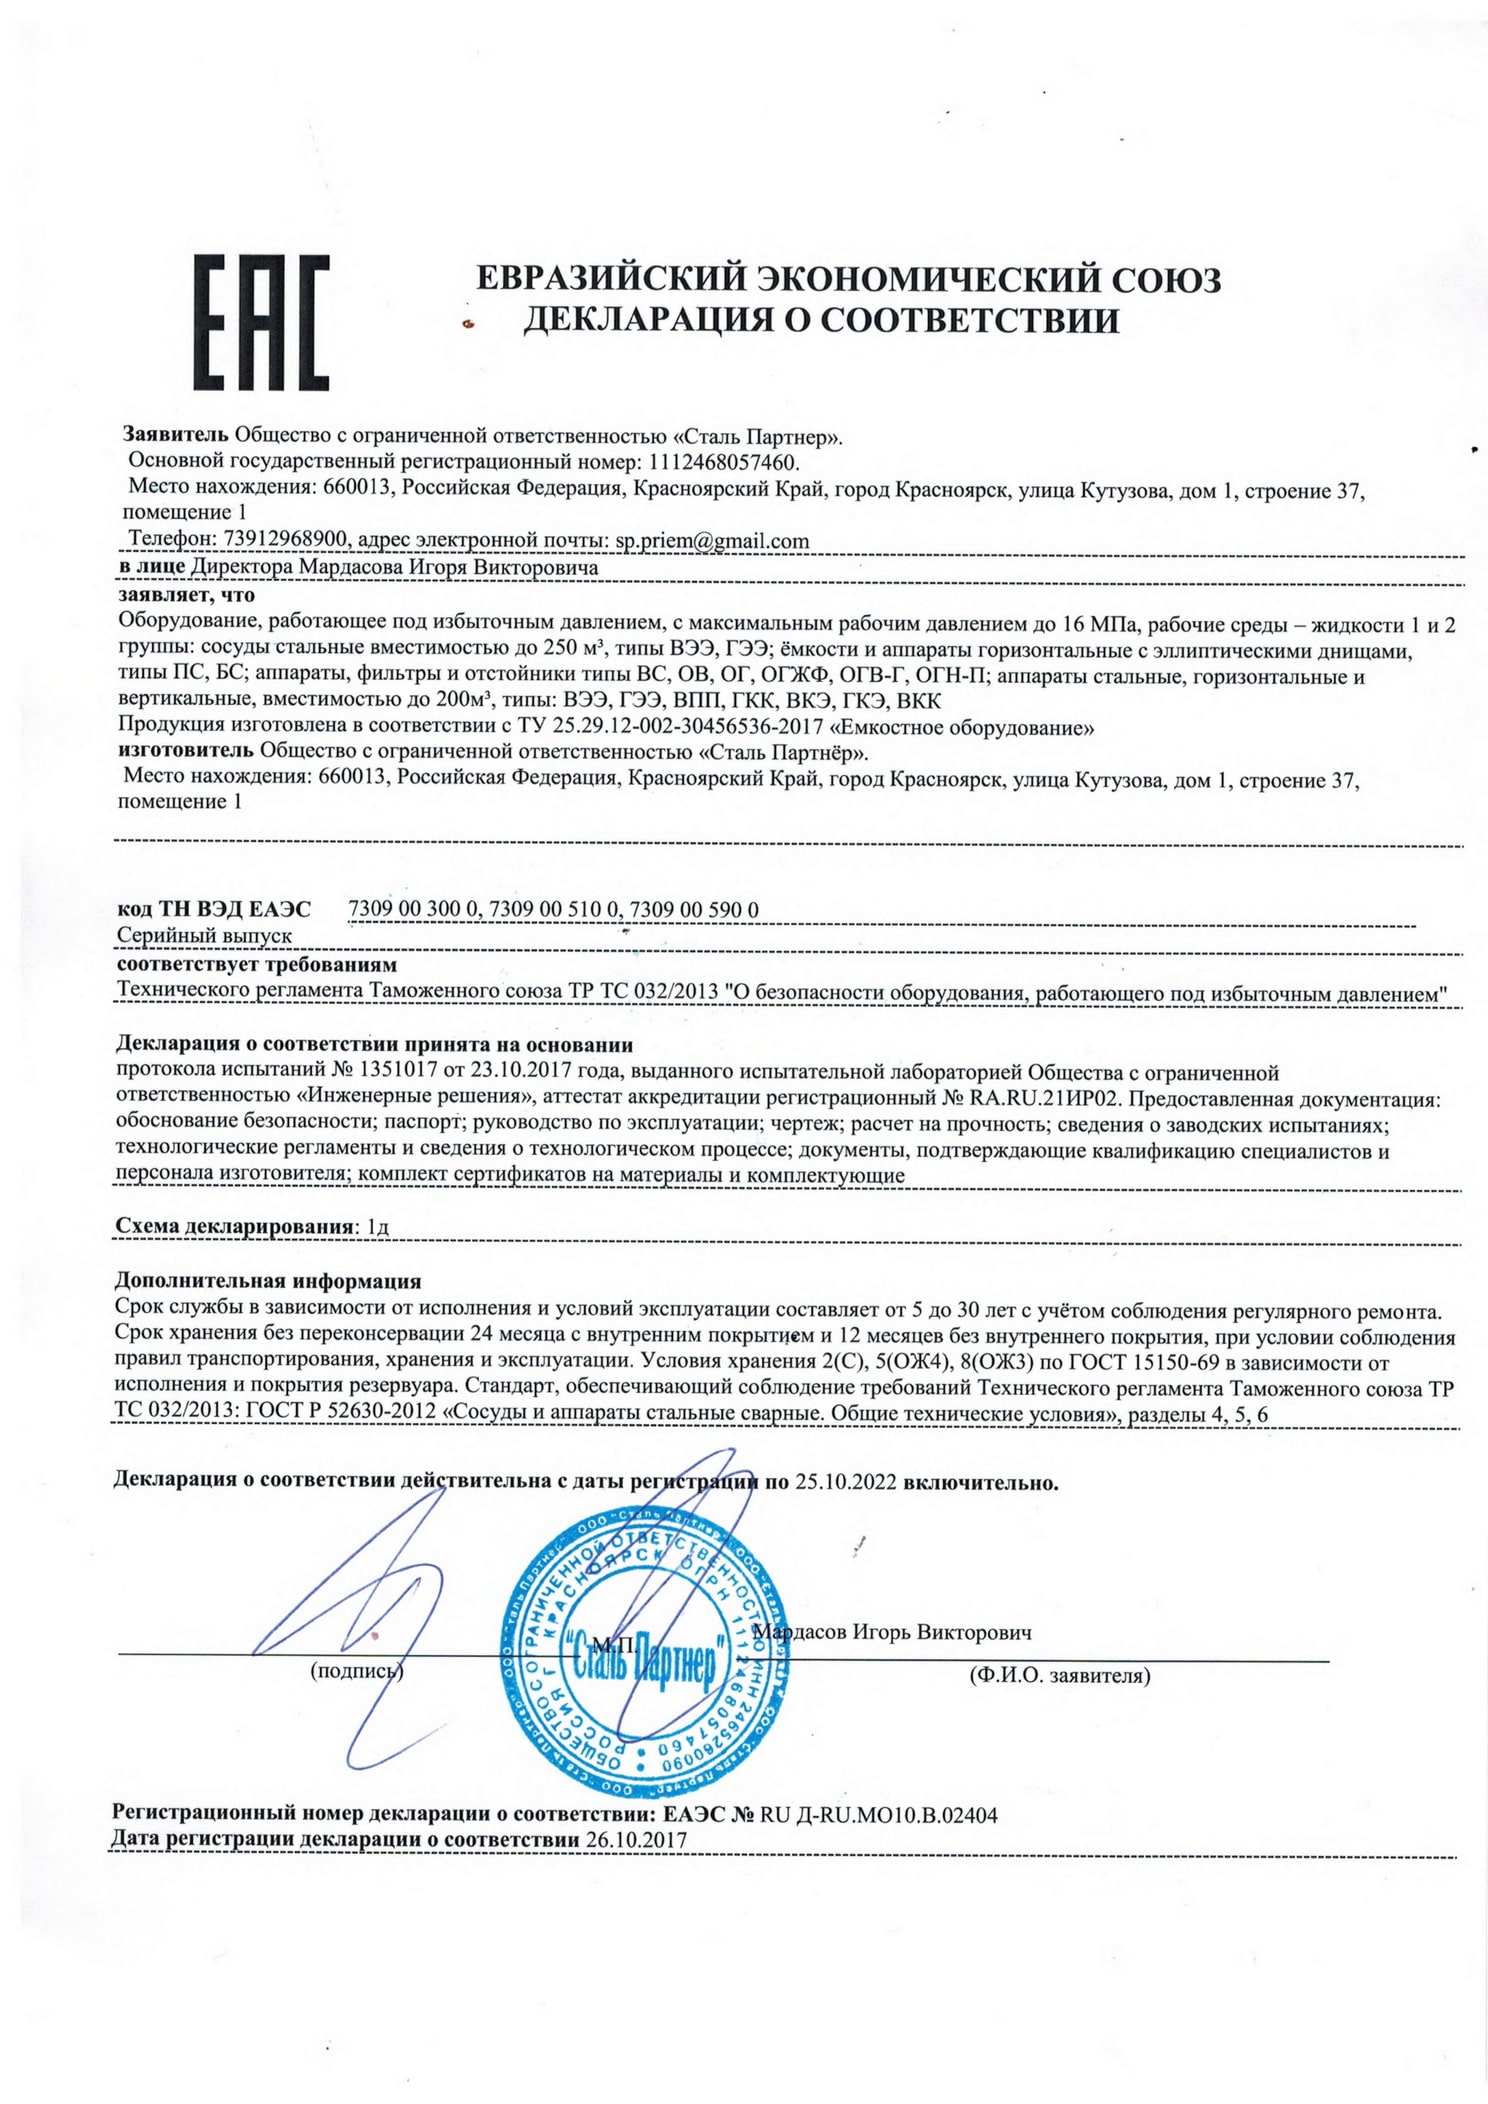 Сертификат ТР ТС 032/2013